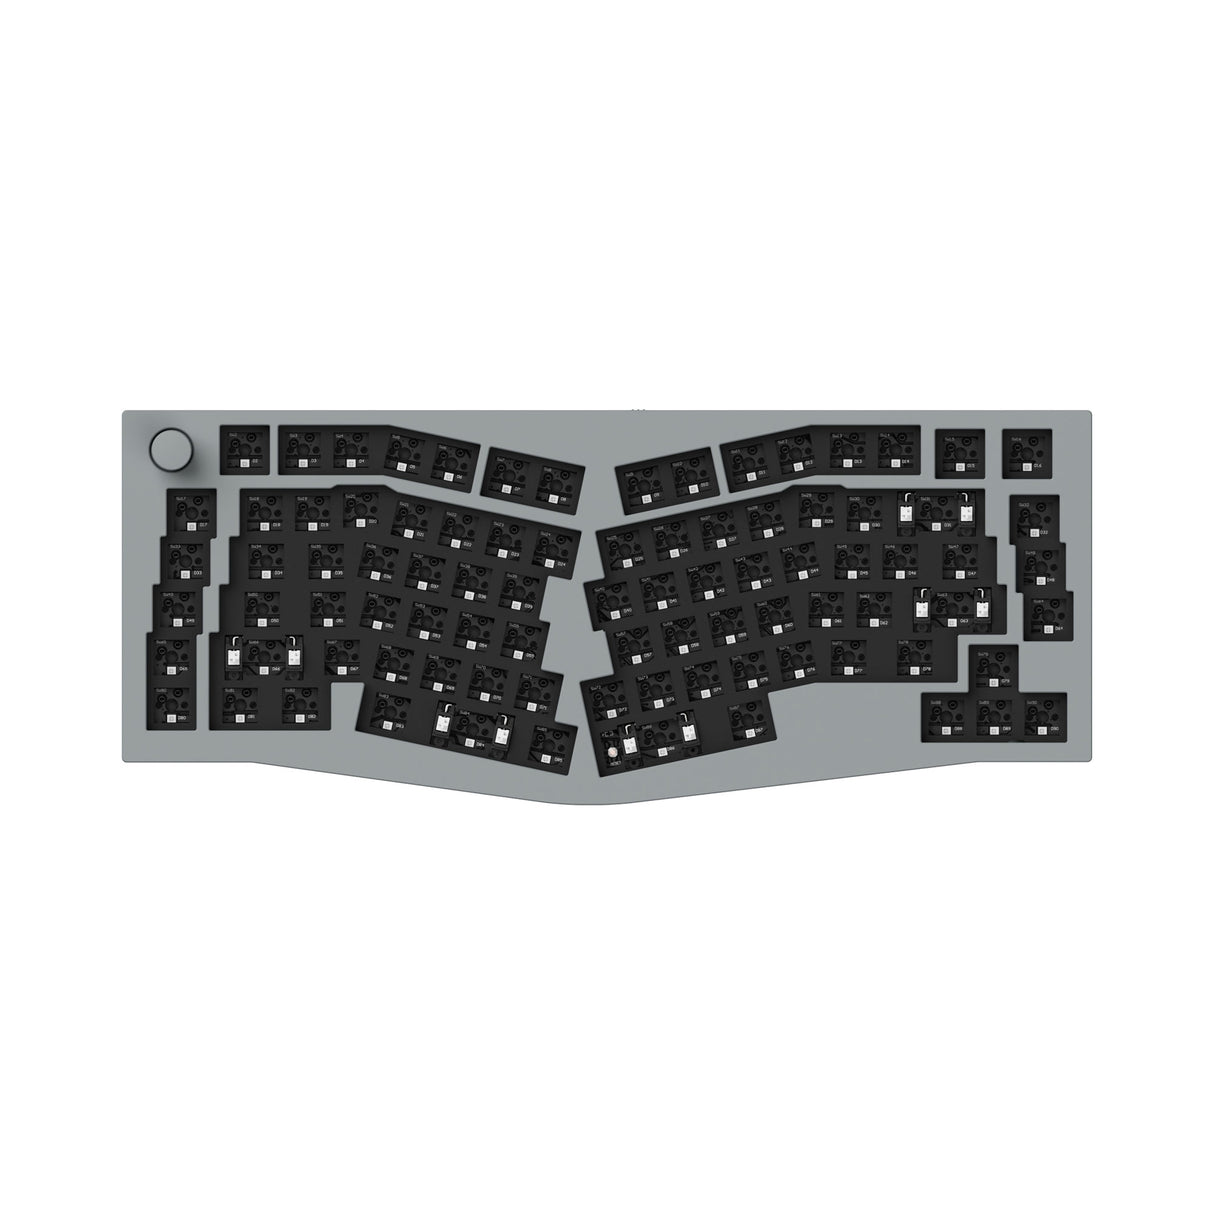 Keychron Q10 QMK/VIA custom mechanical keyboard 75% layout Alice layout knob version for Mac Windows Linux full aluminum frame grey